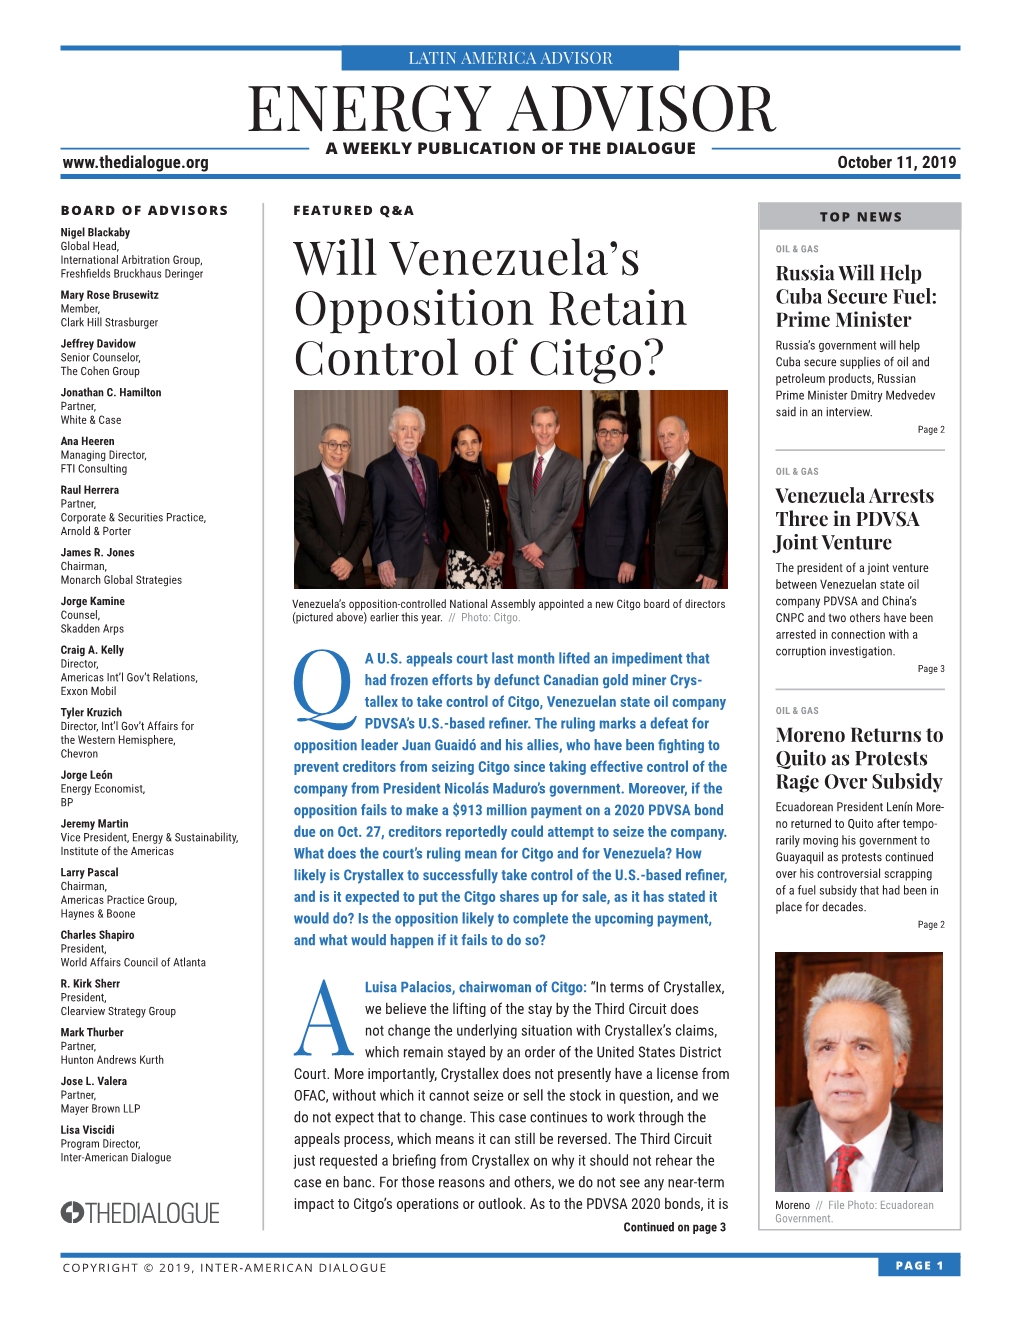 Will Venezuela's Opposition Retain Control of Citgo?